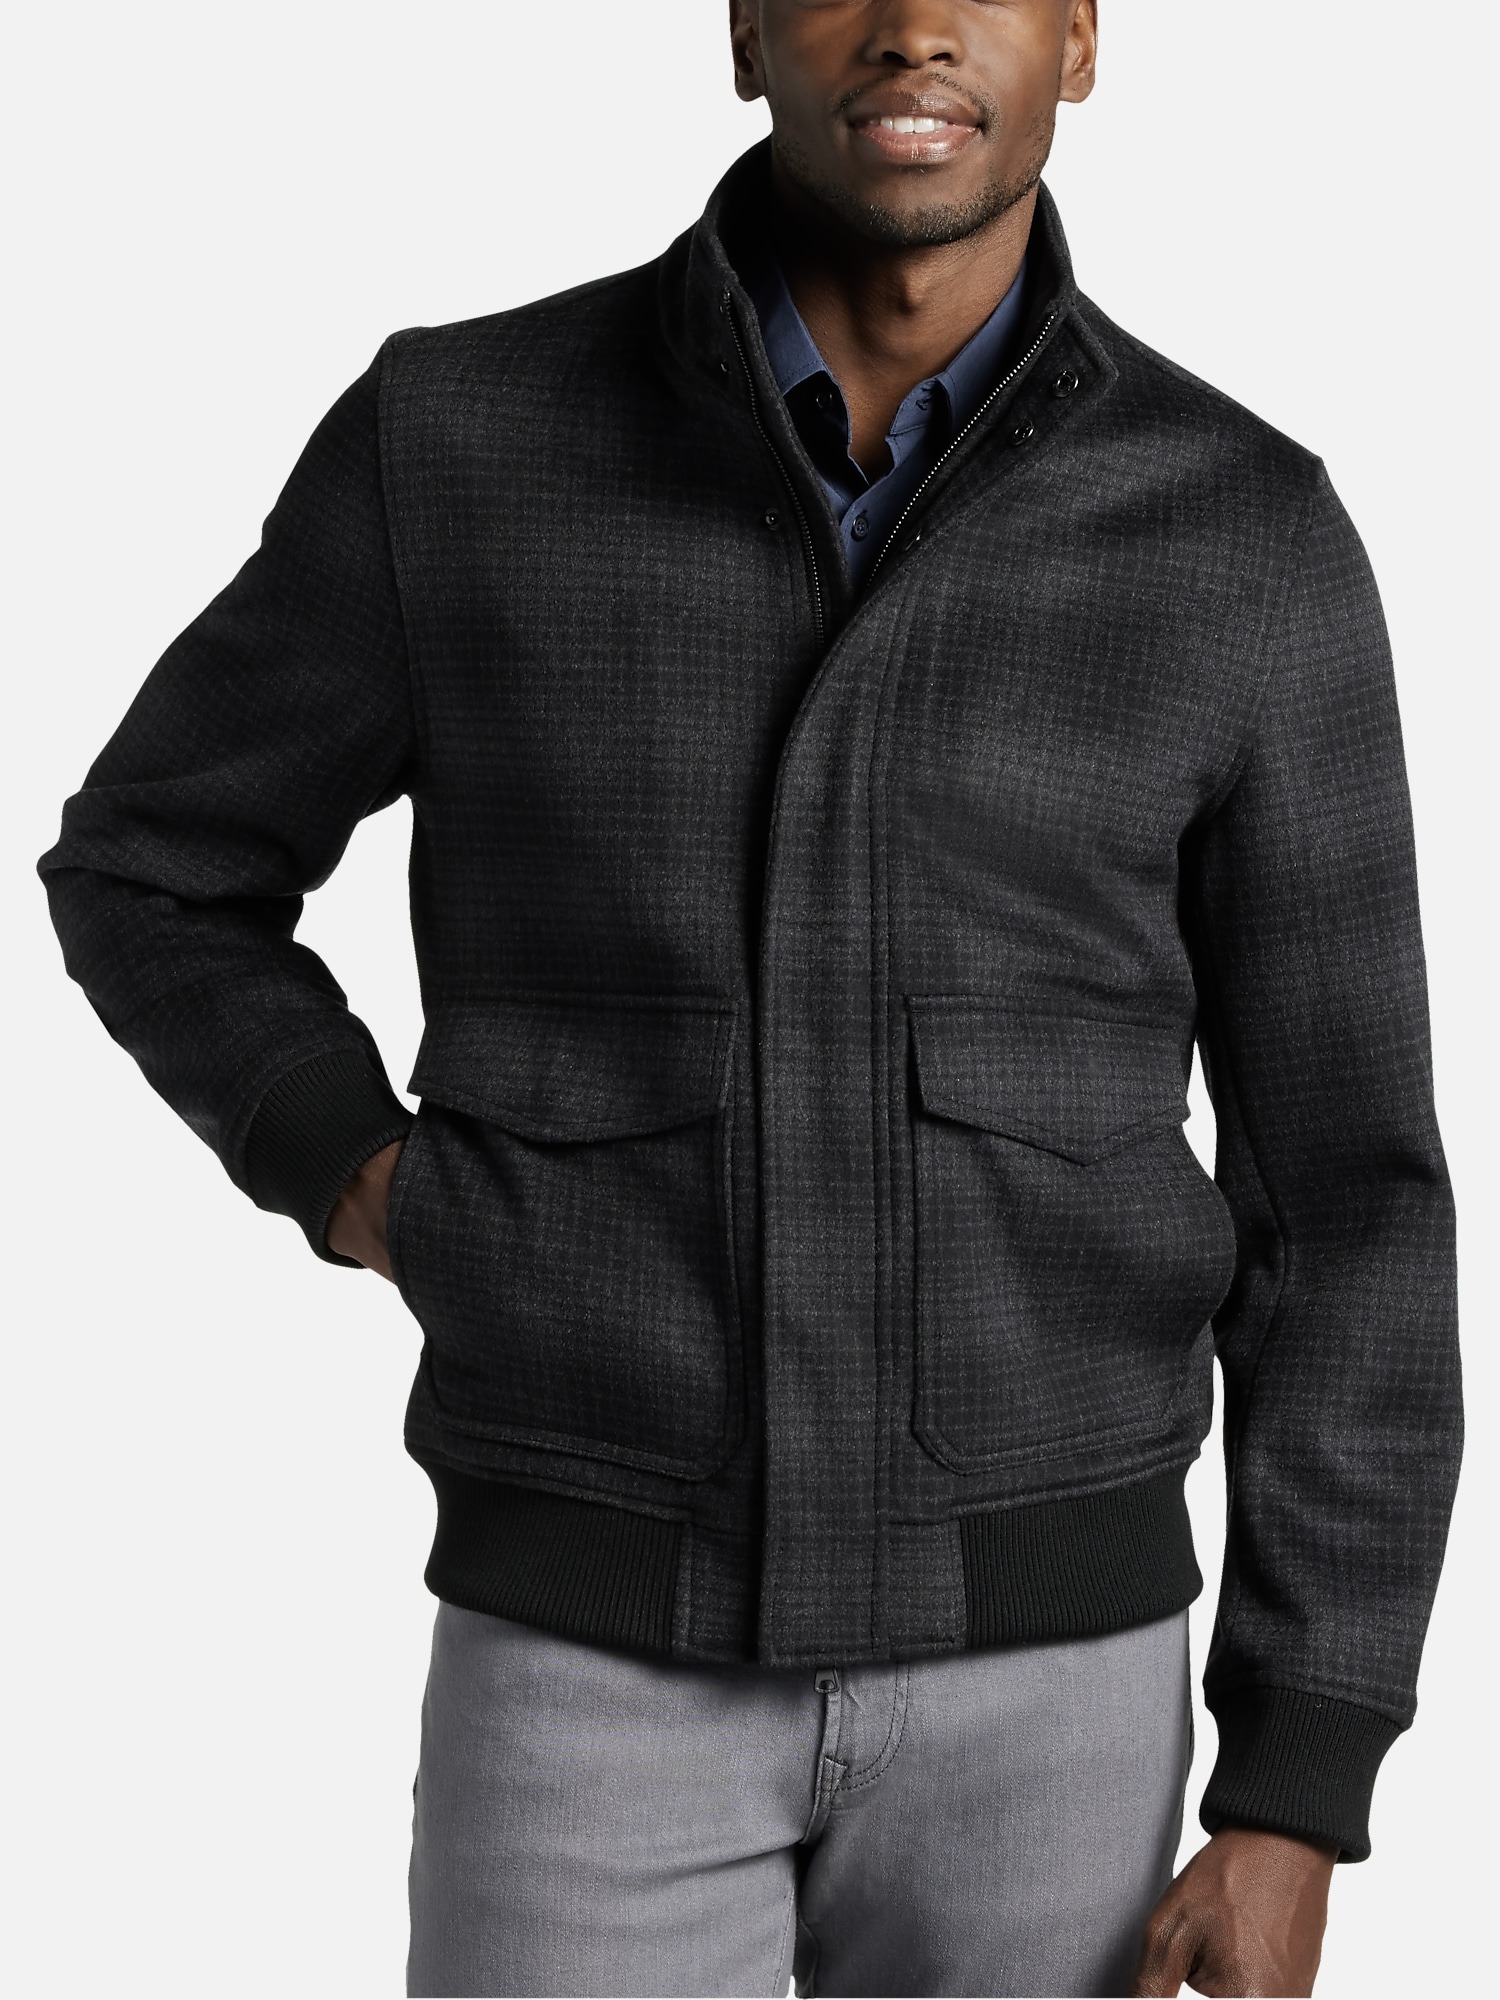 Michael Strahan modern fit wool bomber jacket - Men's Wear house - $20